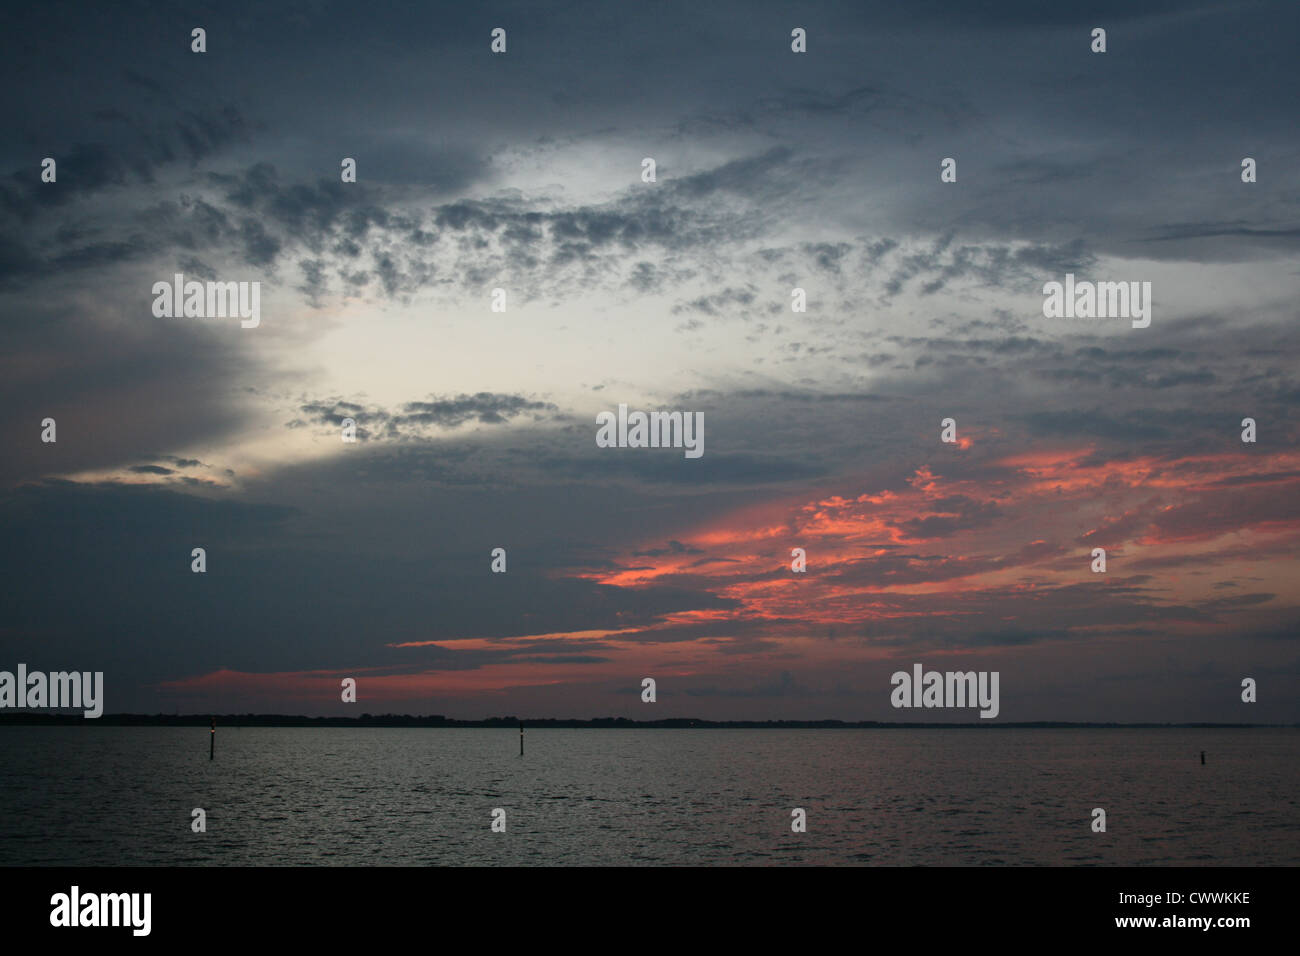 Florida Intra coastal Waterway Sonnenuntergang bewölktem Himmel Bild Stockfoto